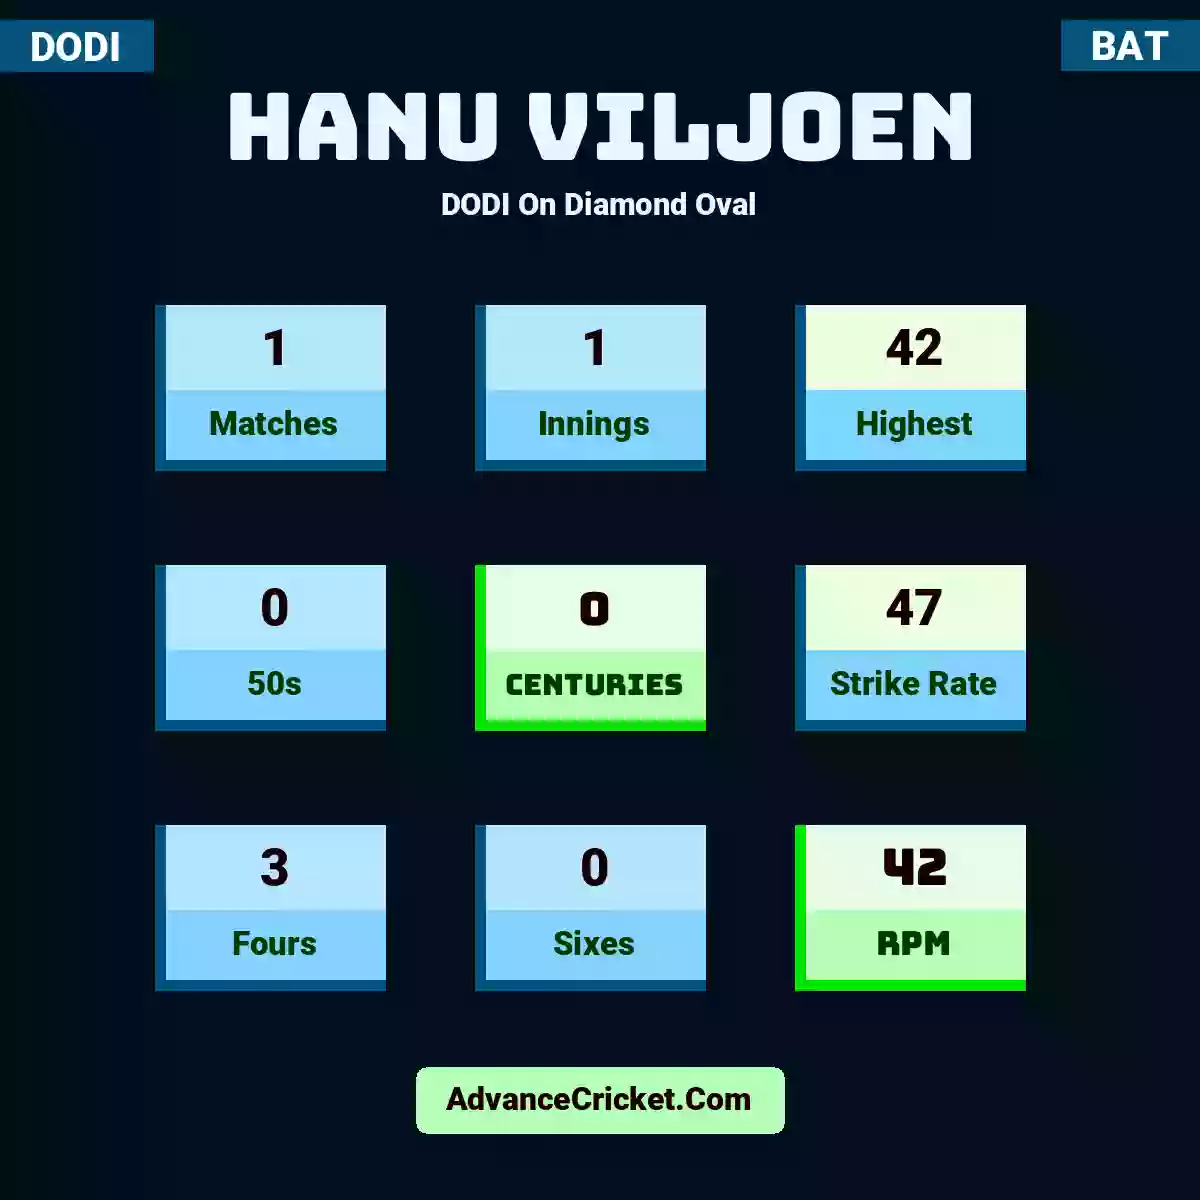 Hanu Viljoen DODI  On Diamond Oval, Hanu Viljoen played 1 matches, scored 42 runs as highest, 0 half-centuries, and 0 centuries, with a strike rate of 47. H.Viljoen hit 3 fours and 0 sixes, with an RPM of 42.